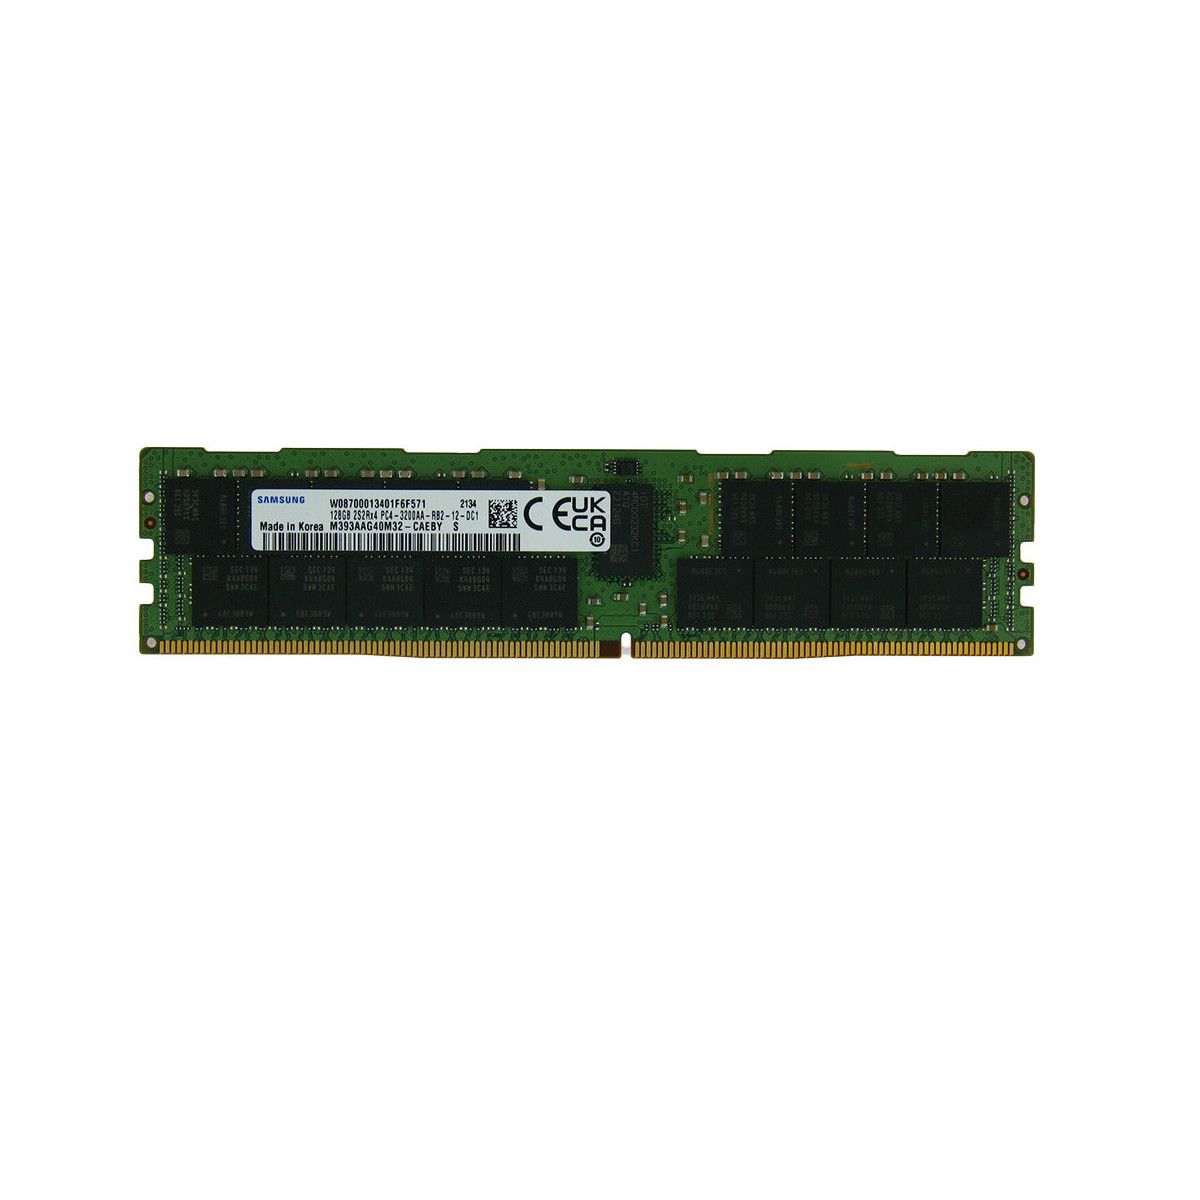 CO SIĘ DZIEJE- Memstar 1x 128GB DDR4-3200 RDIMM PC4-25600R - Mem-Star OEM Kompatybilna pamięć 1 - Memstar 